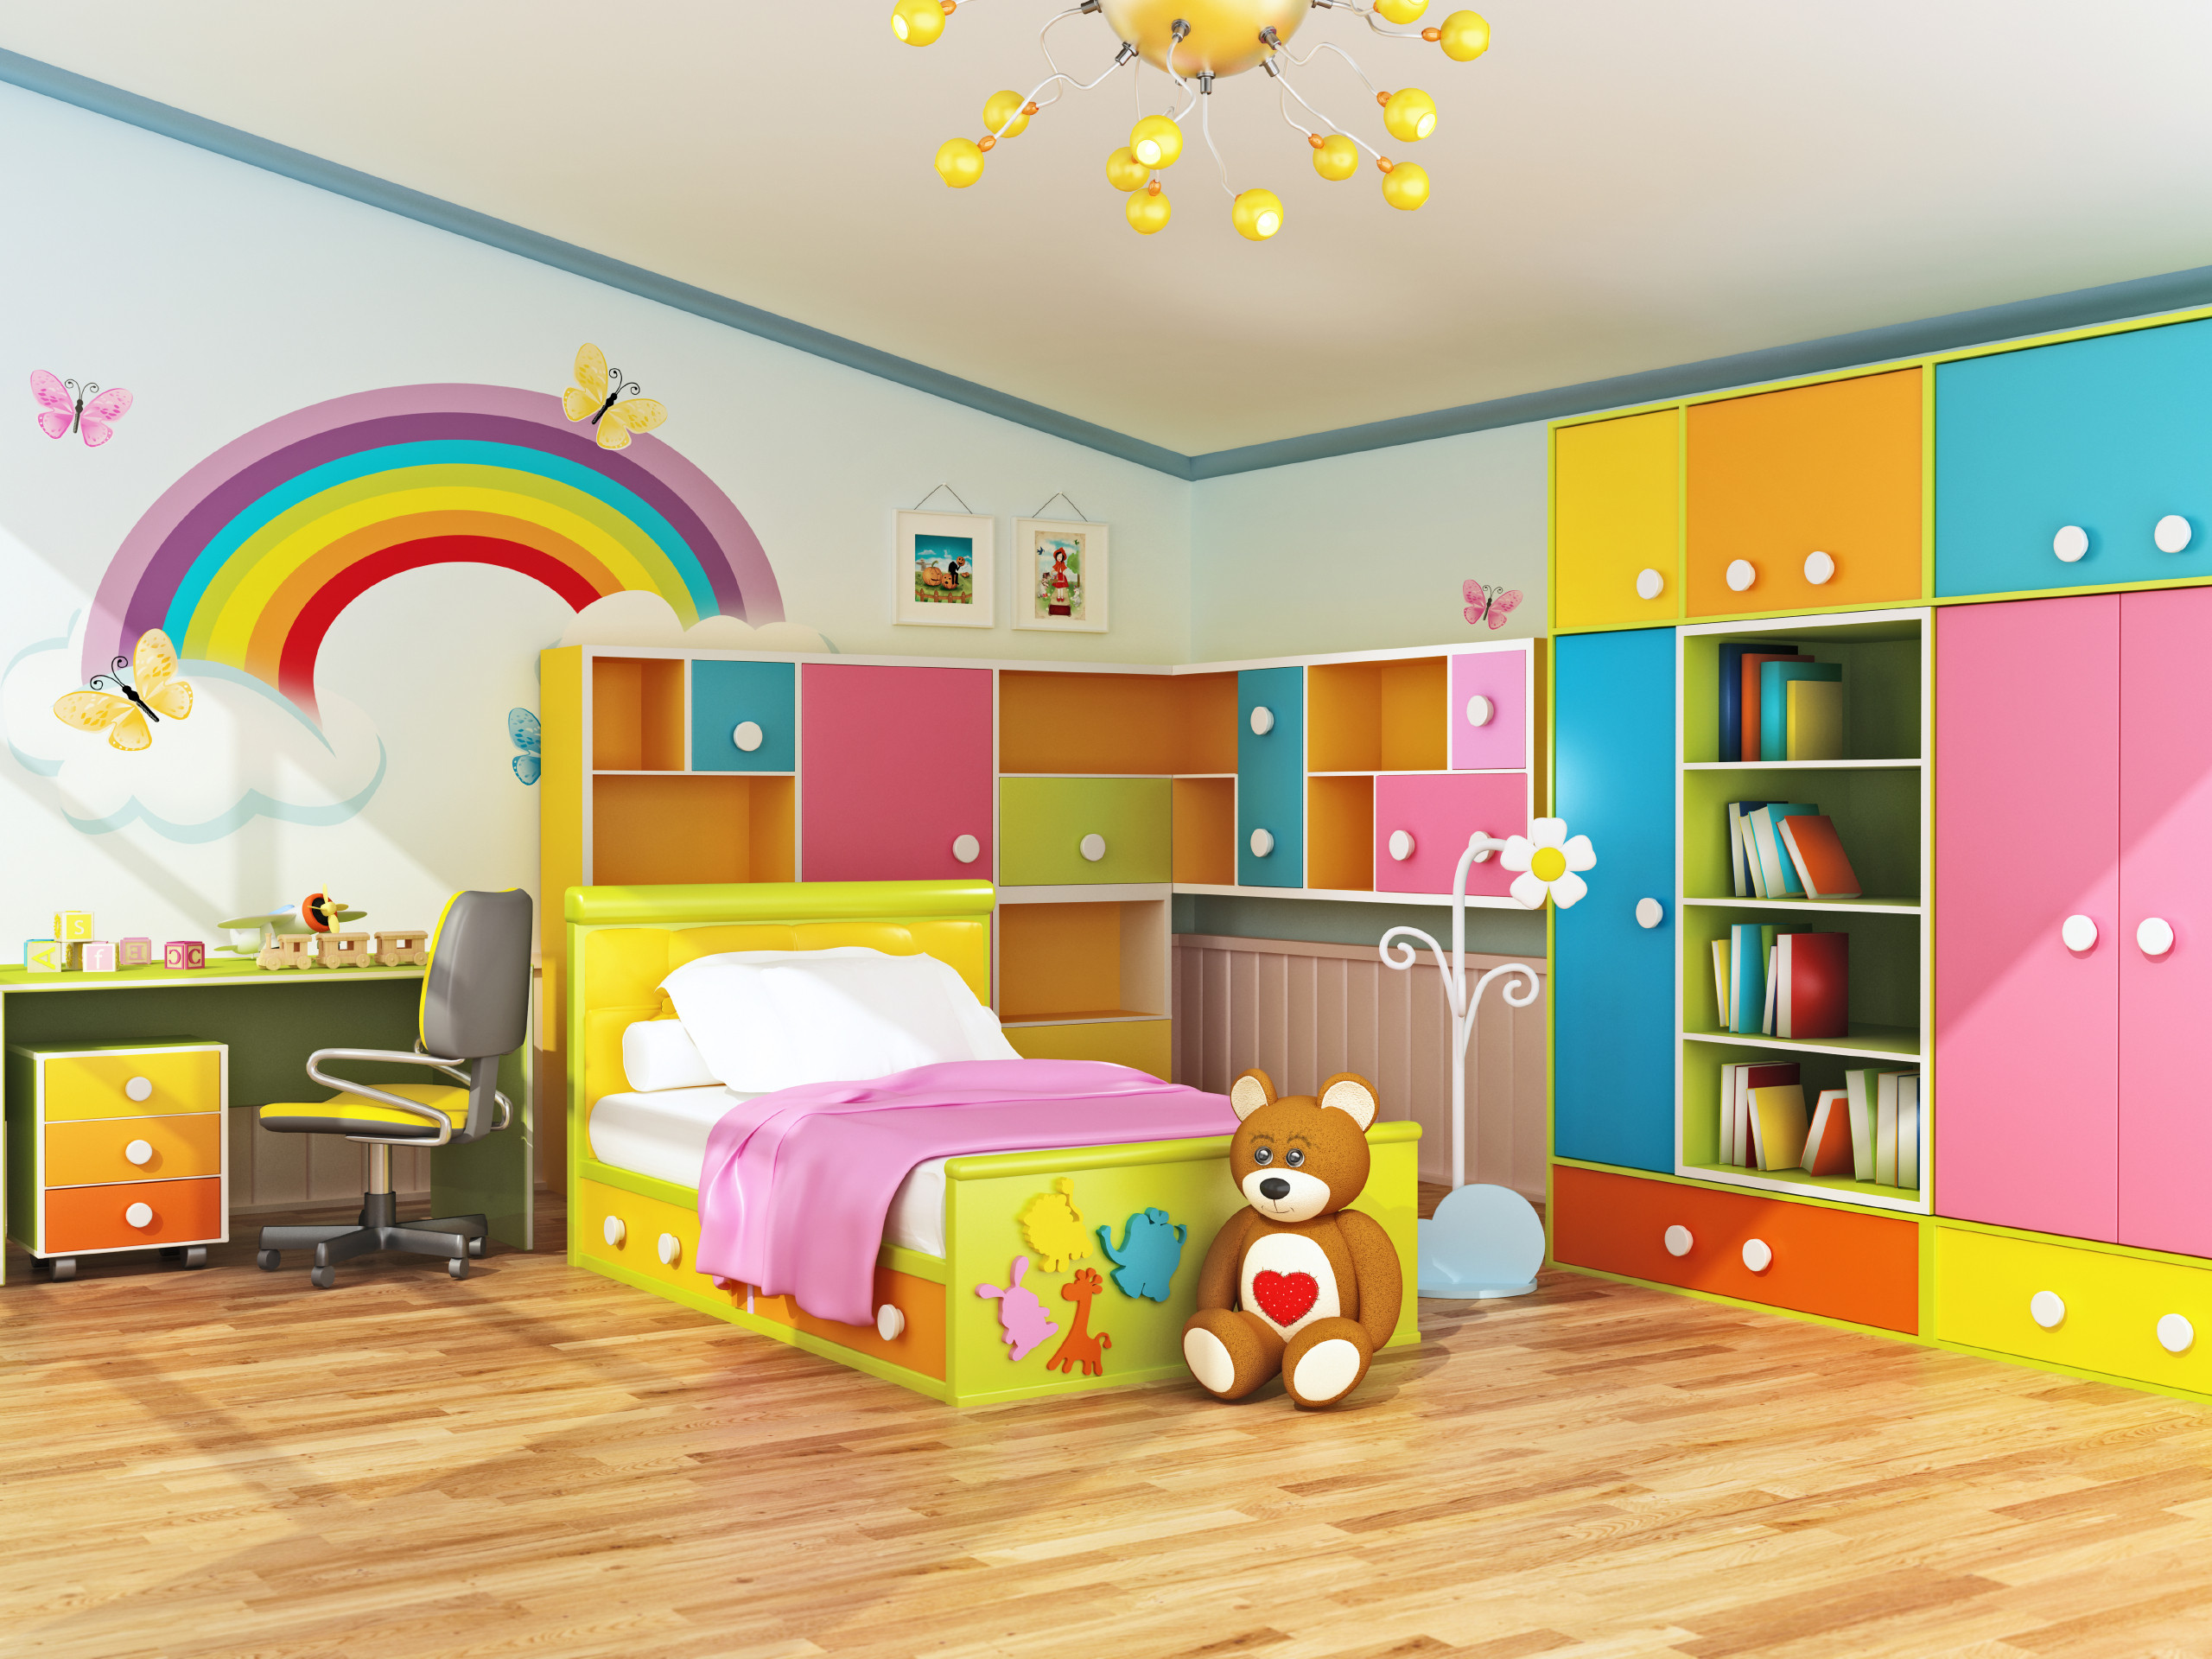 Ideas For Kids Bedrooms
 Plan Ahead When Decorating Kids Bedrooms